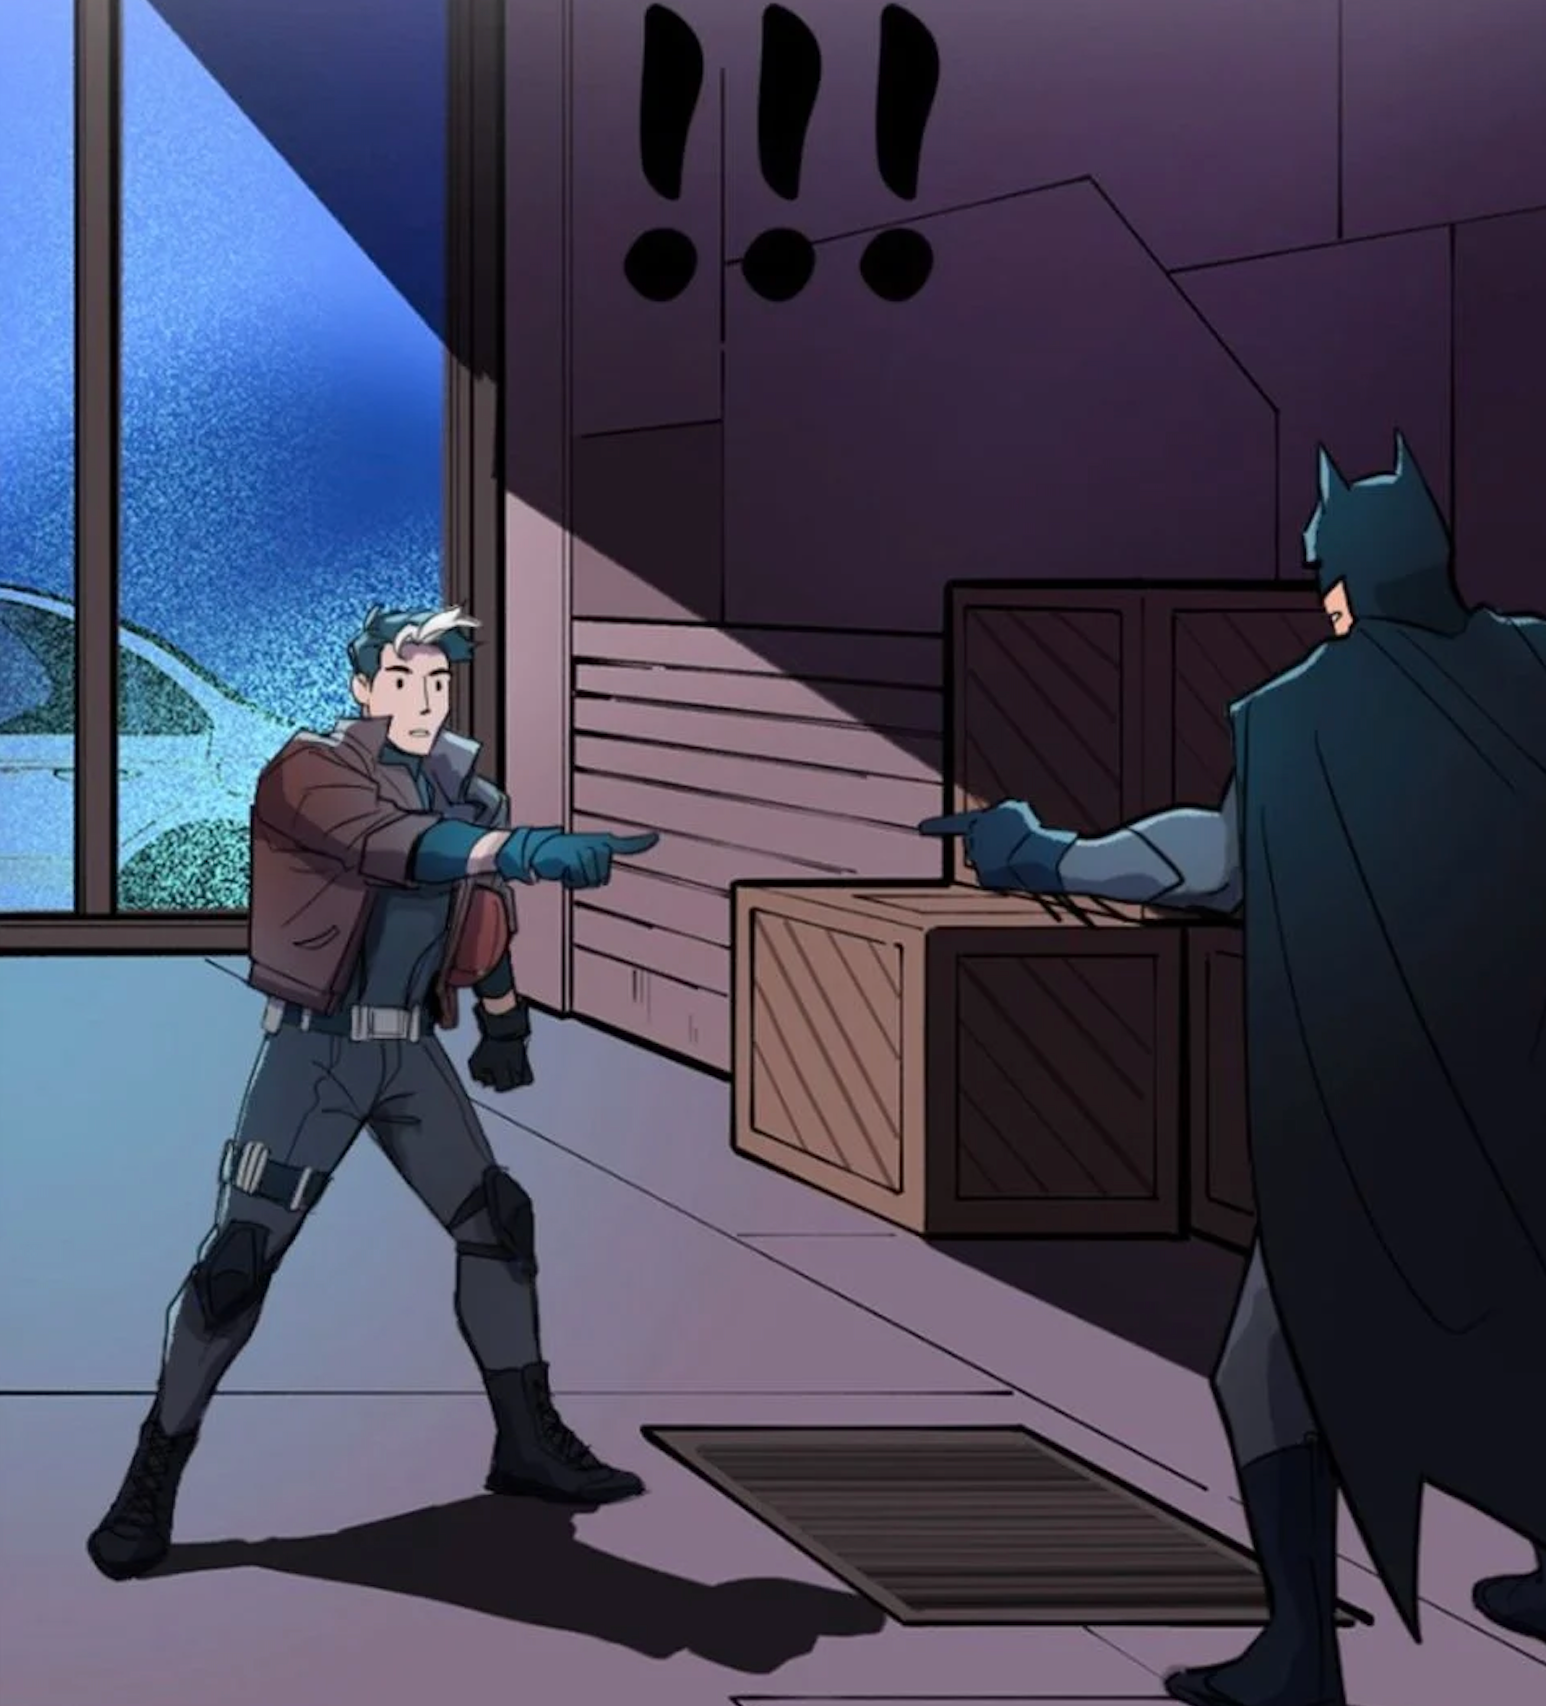 Batman Webtoon Creates New Version of Spider-Man Pointing Meme